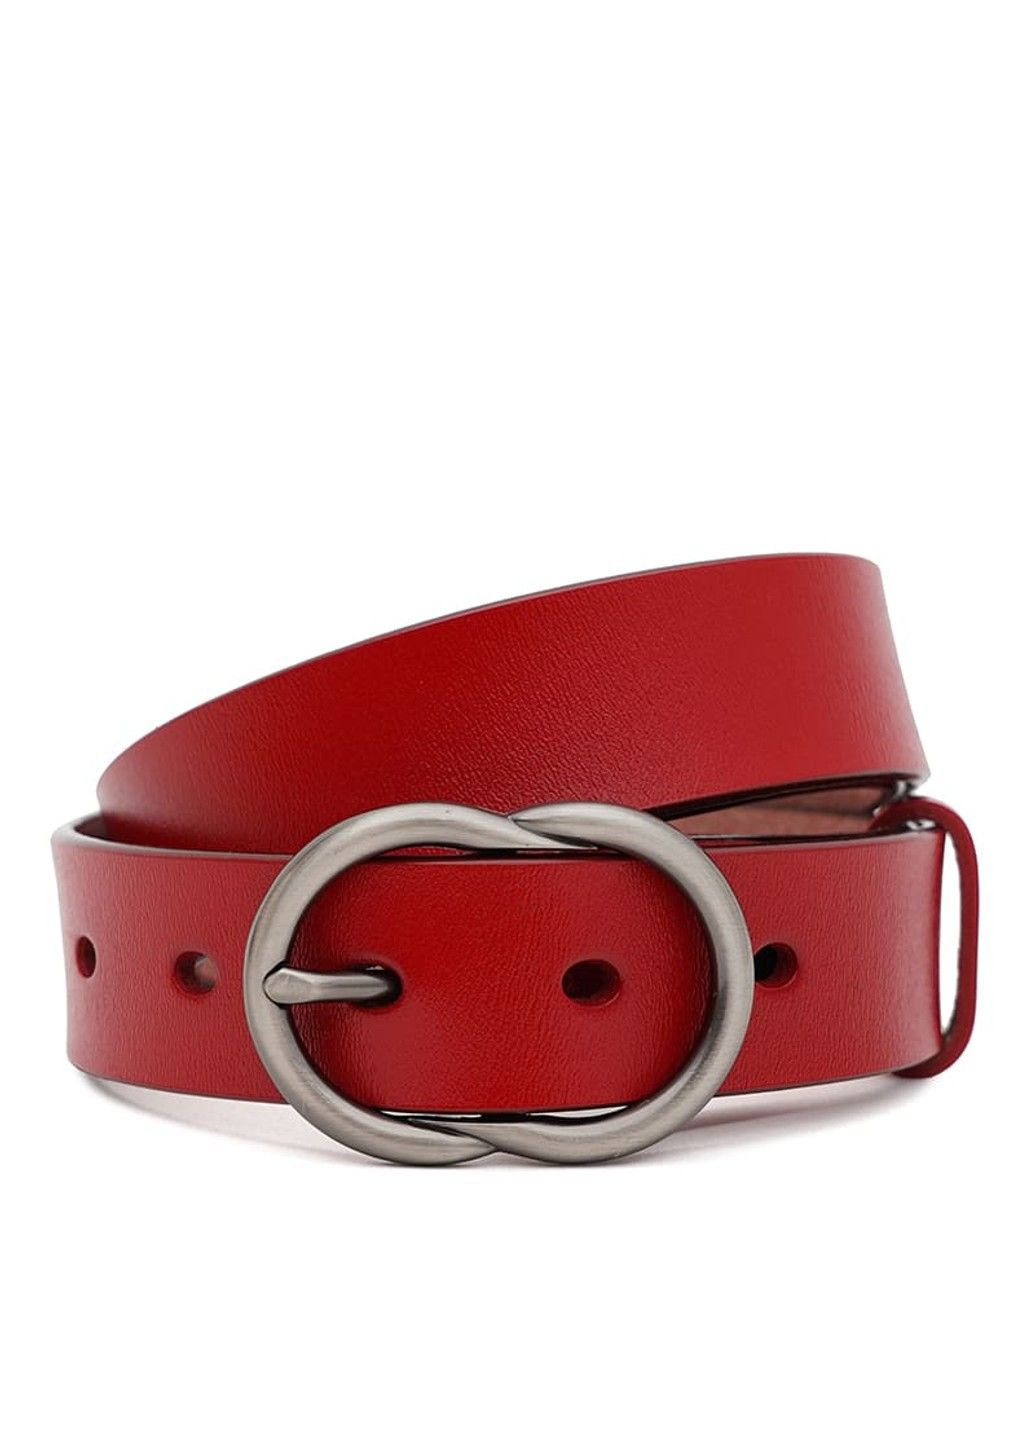 Женский кожаный ремень CV1ZK-002r-red Borsa Leather (291683093)